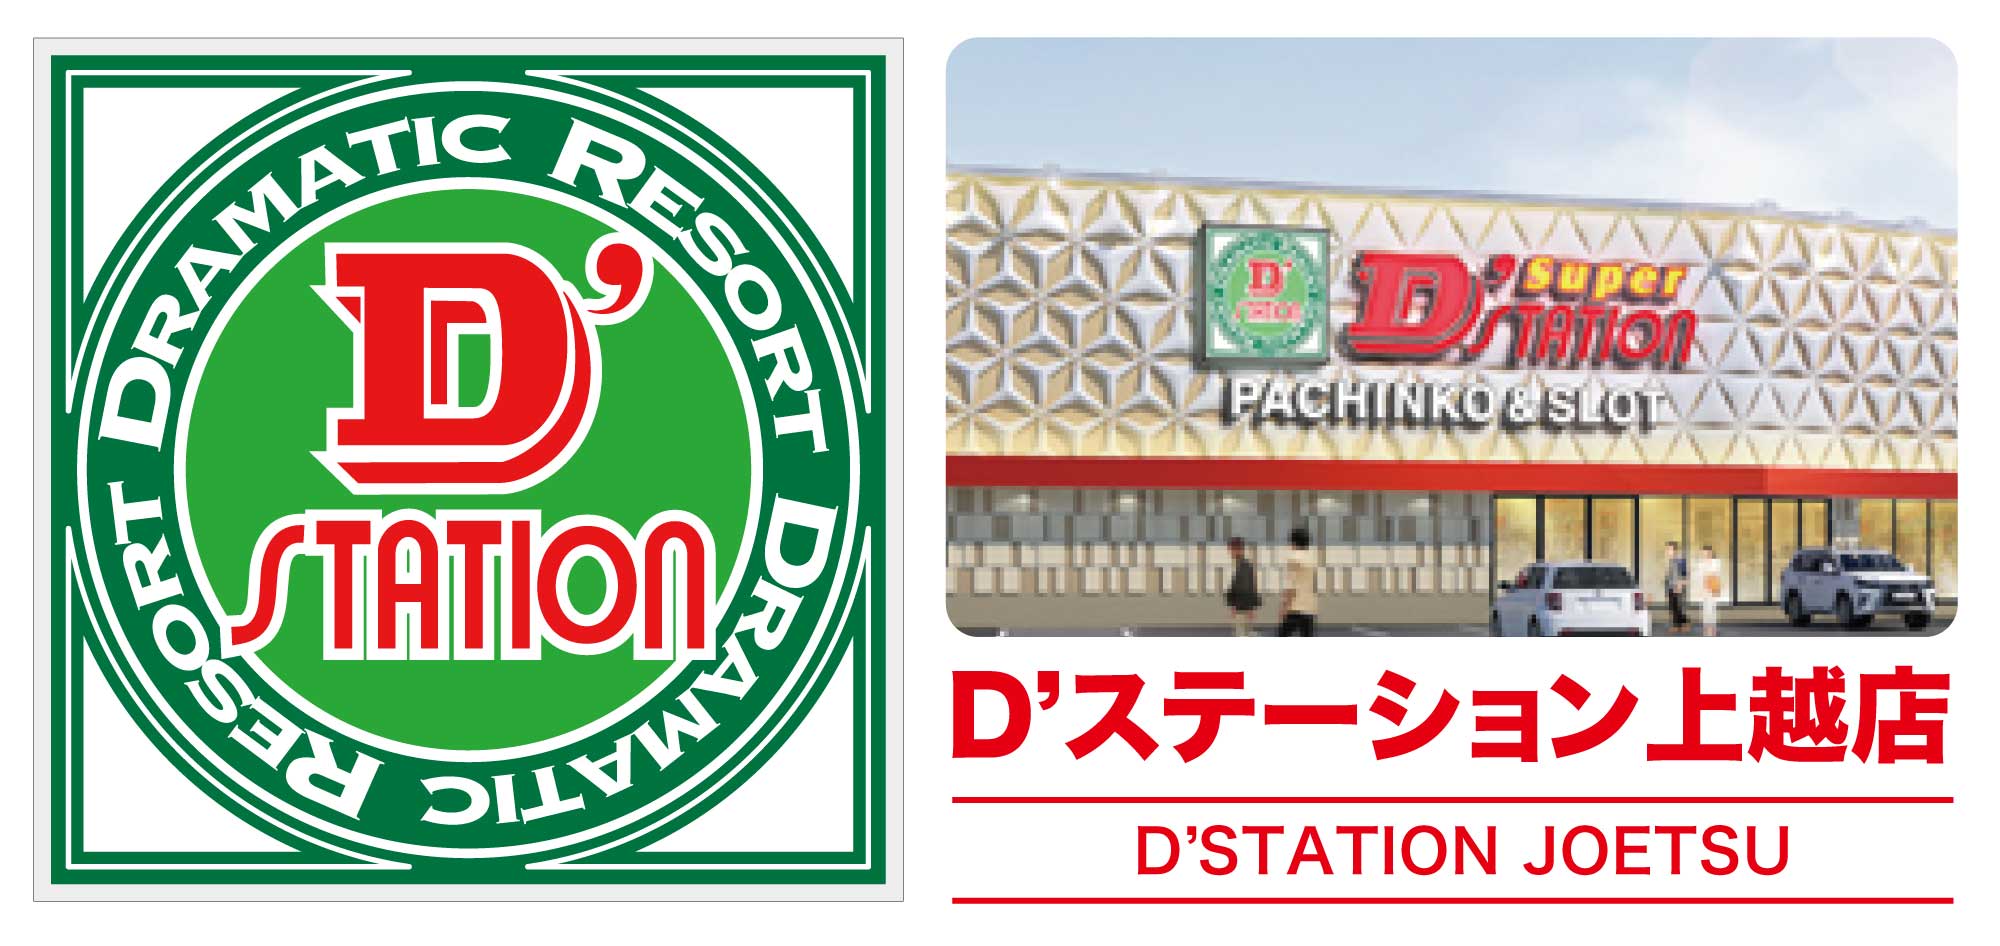 D’station上越店の屋号とパース図